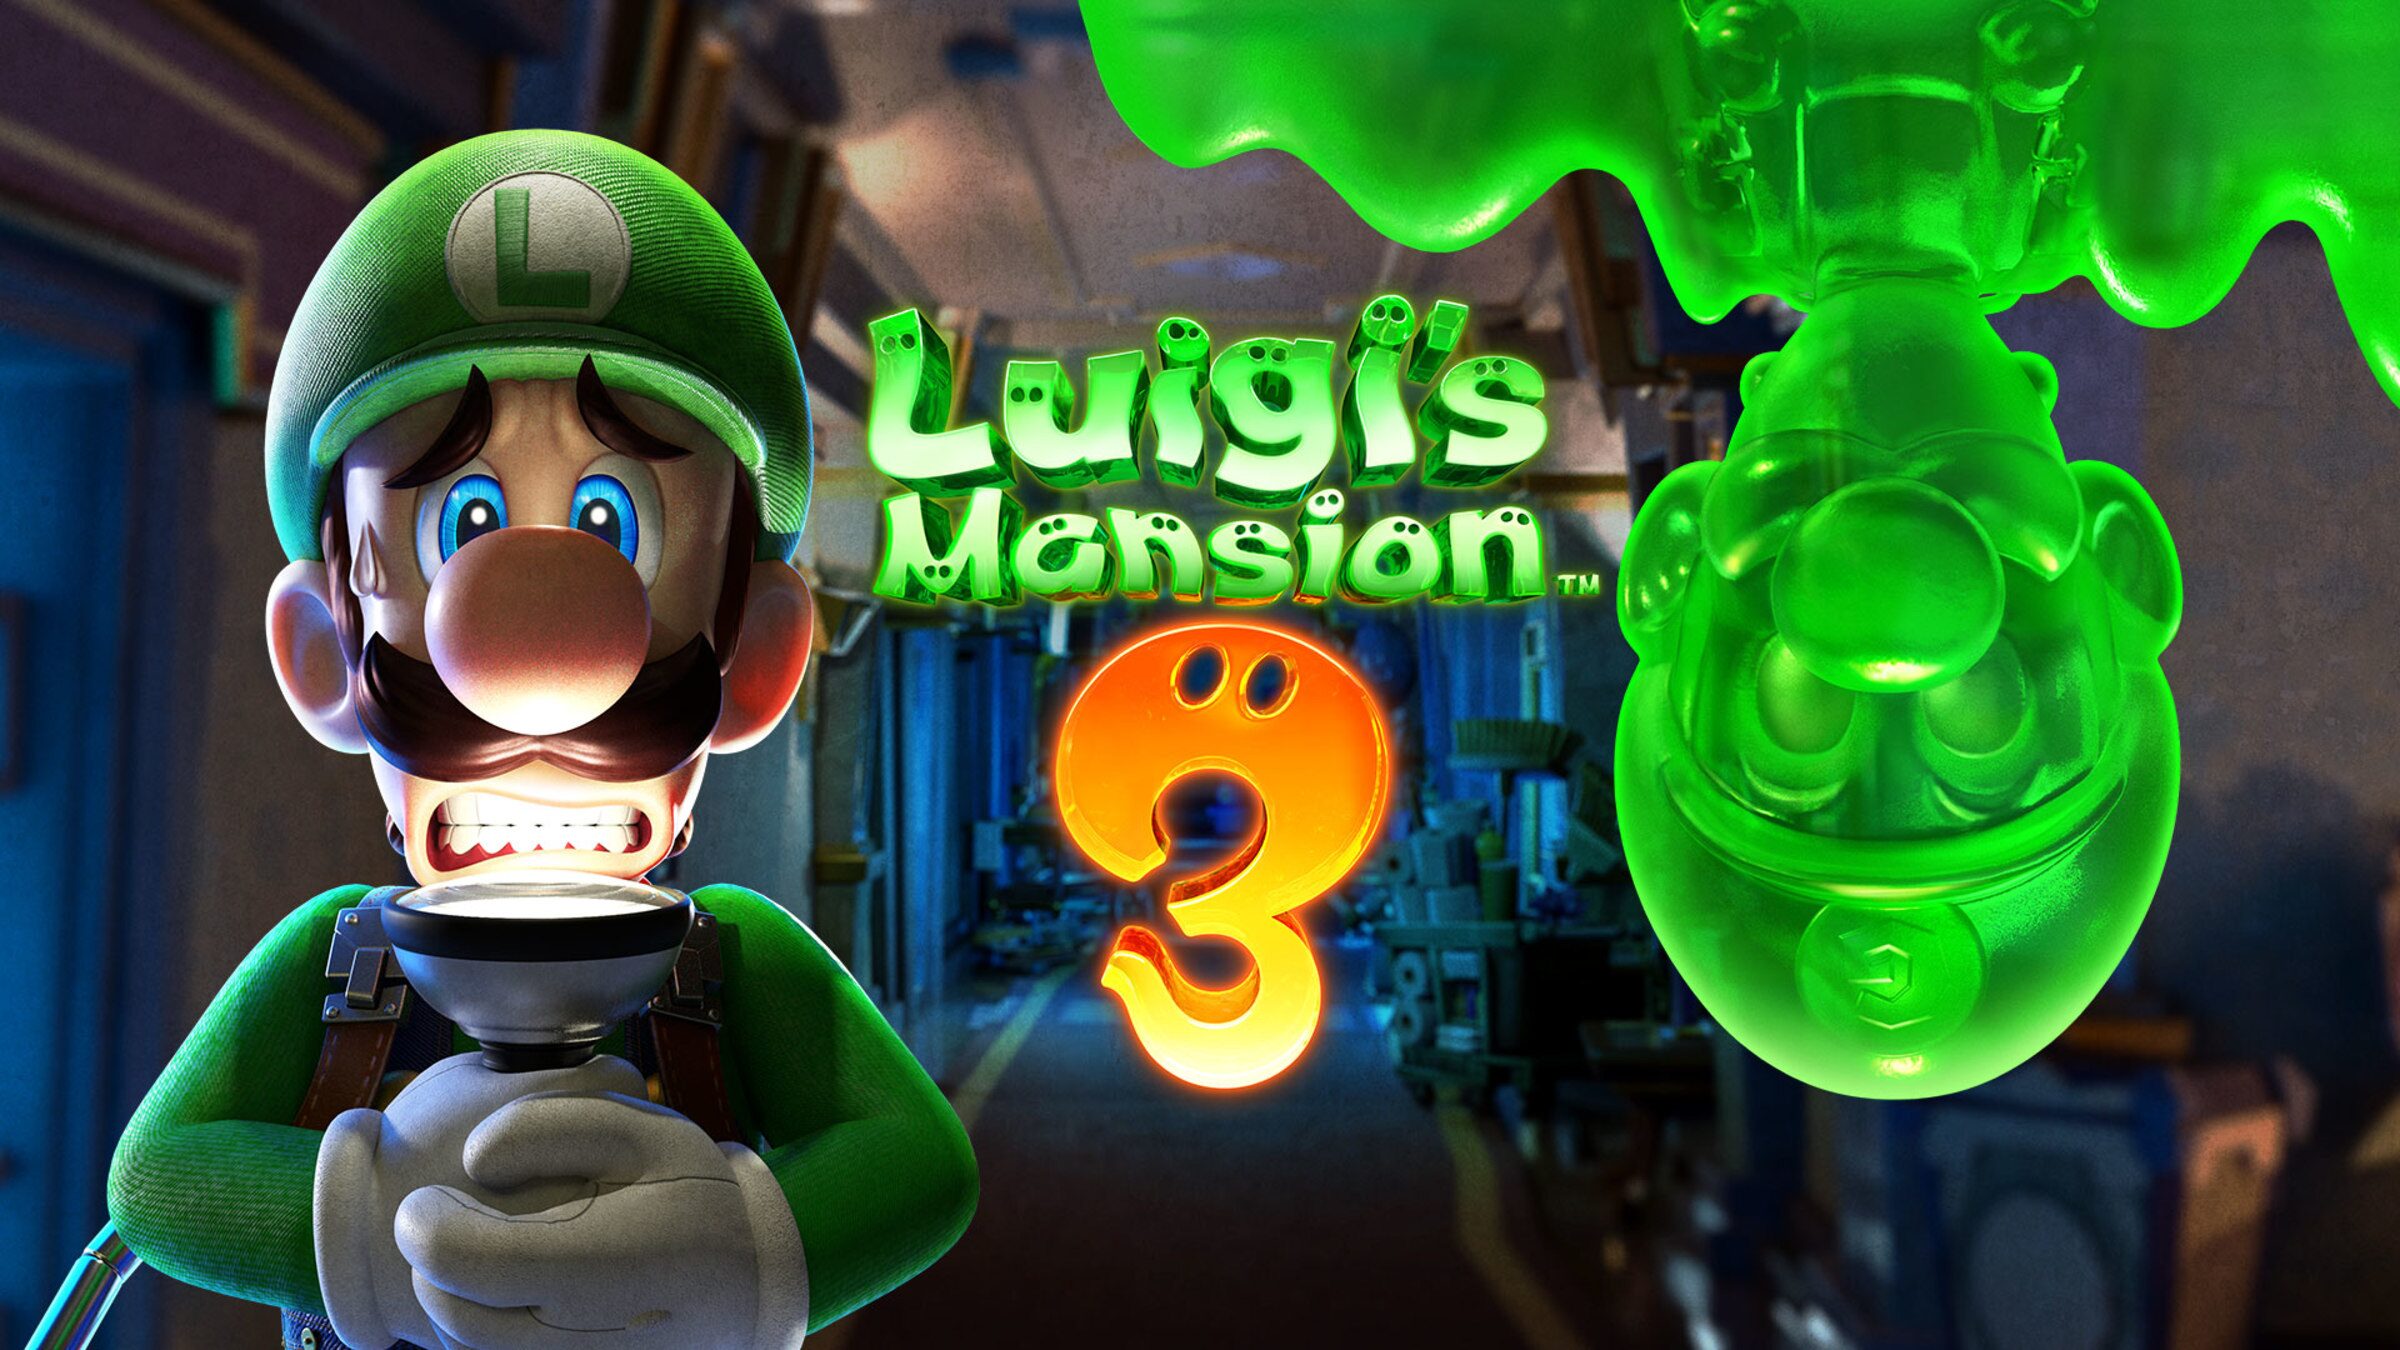 Luigi’s mansion 3 – Nintendo Switch/2019